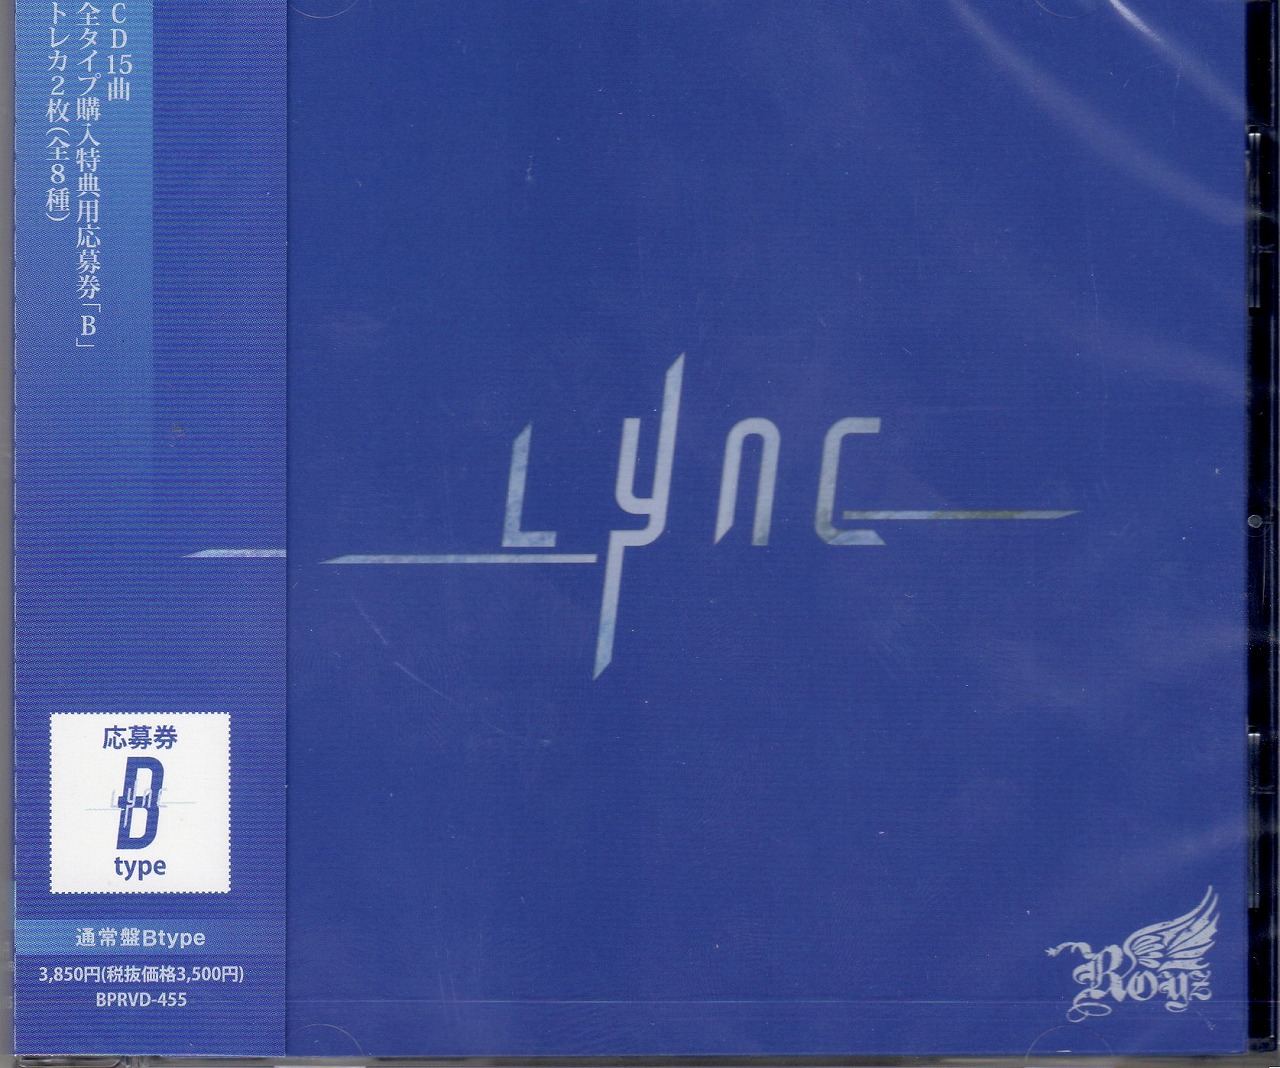 Royz の CD 【Btype】Lync